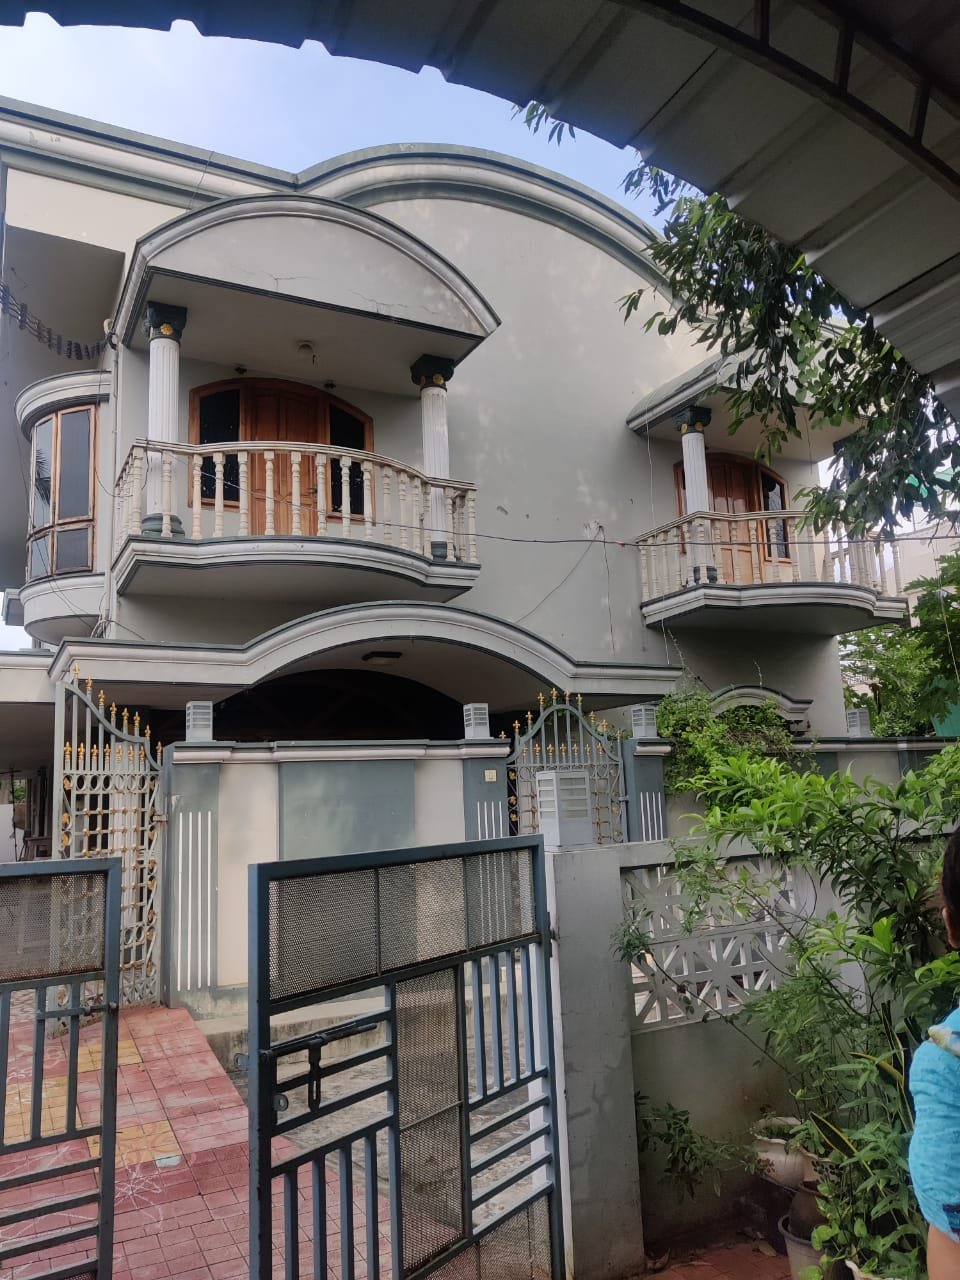 Duplex House For Sale at Hukumpeta, Rajahmundry